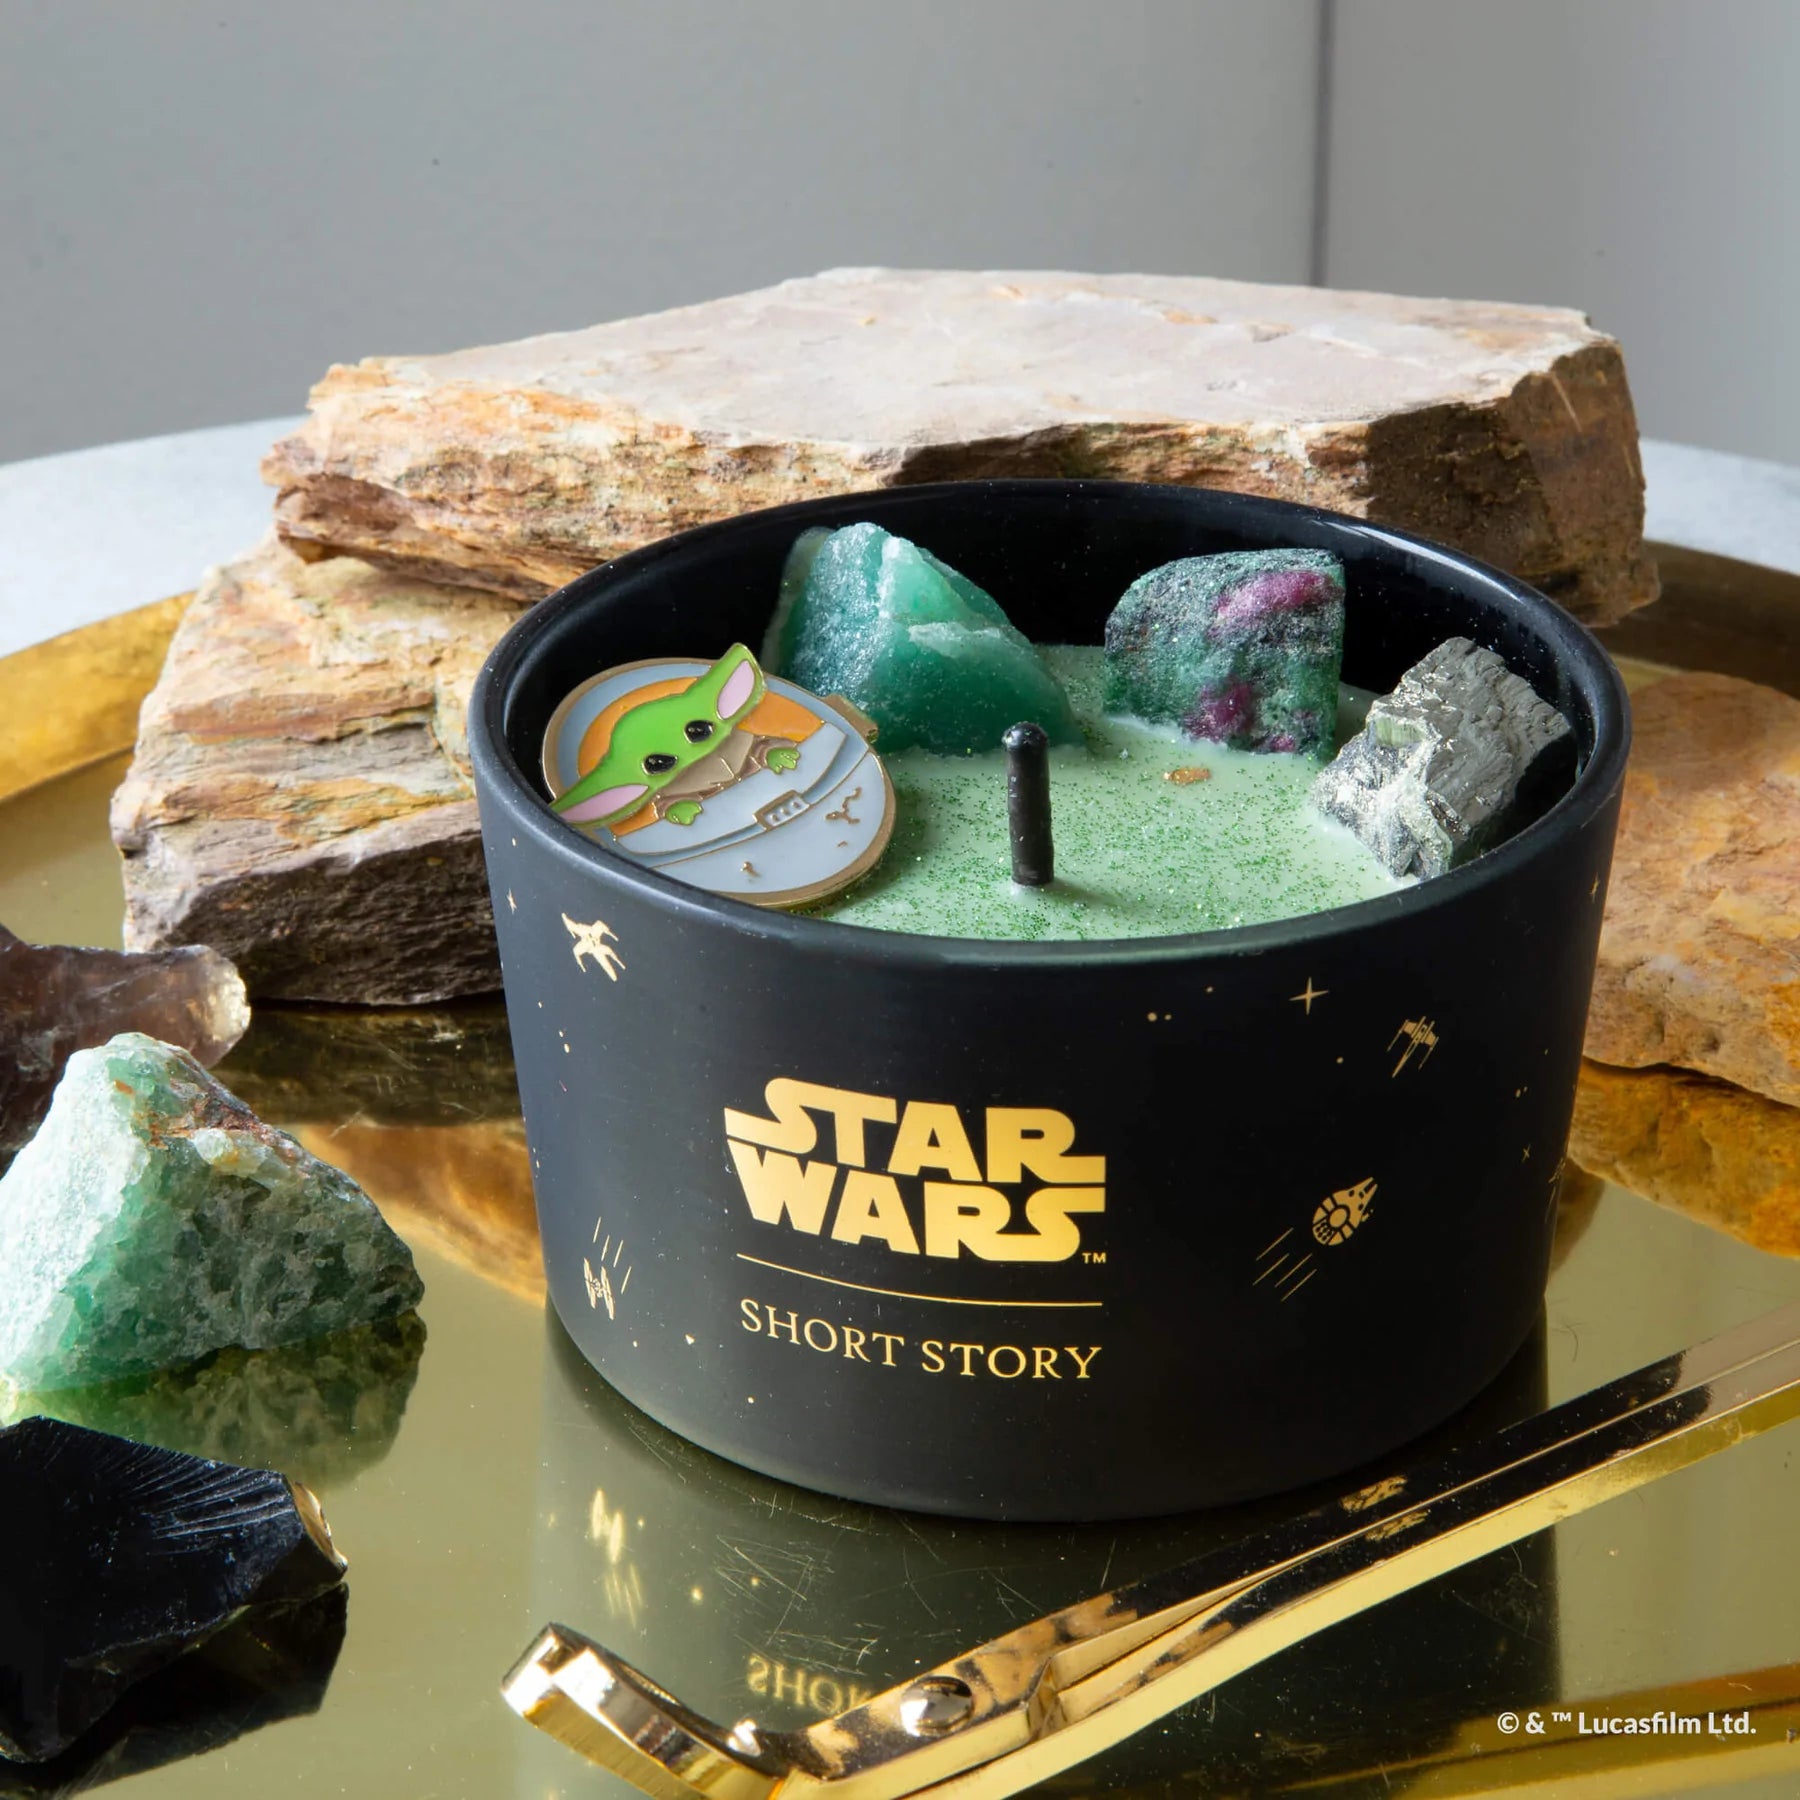 Short Story - Star Wars Candle Grogu